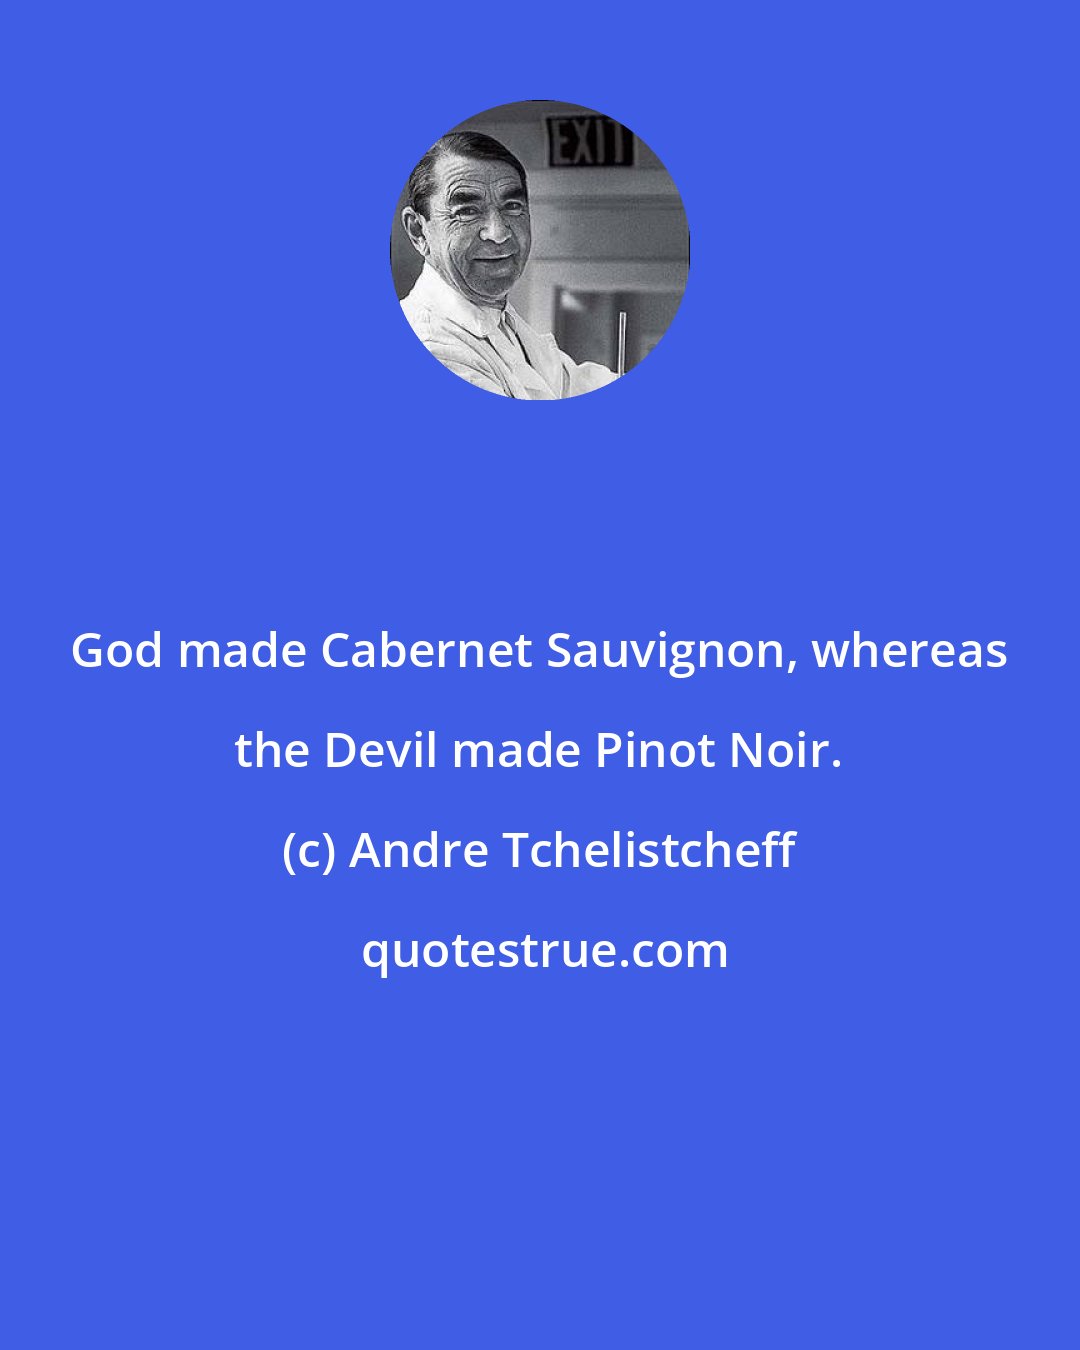 Andre Tchelistcheff: God made Cabernet Sauvignon, whereas the Devil made Pinot Noir.